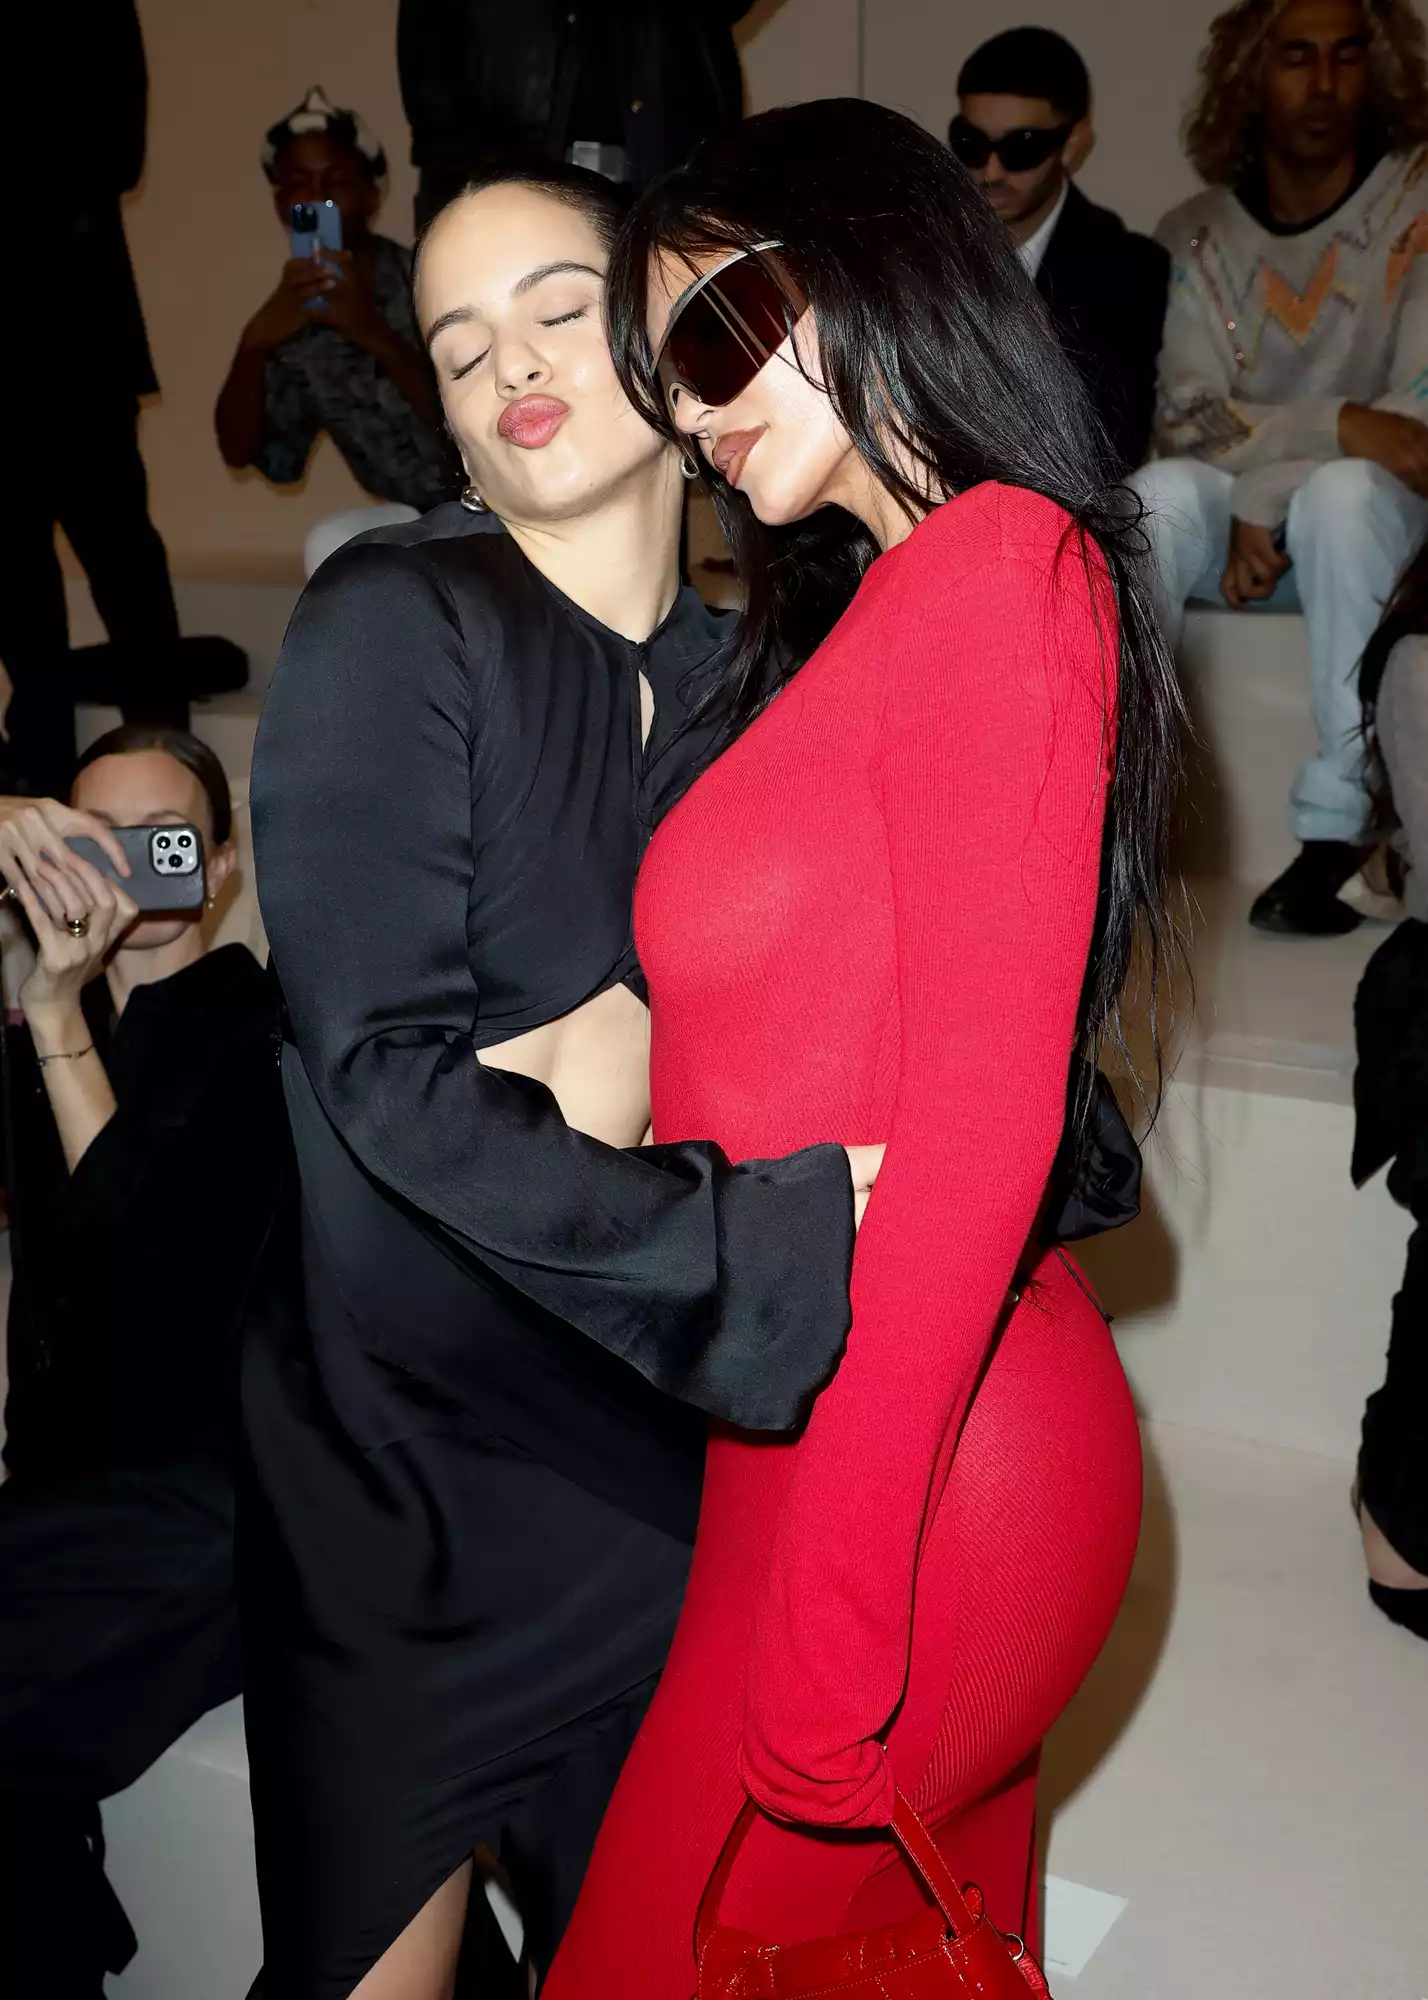 Kylie Jenner and Rosalia